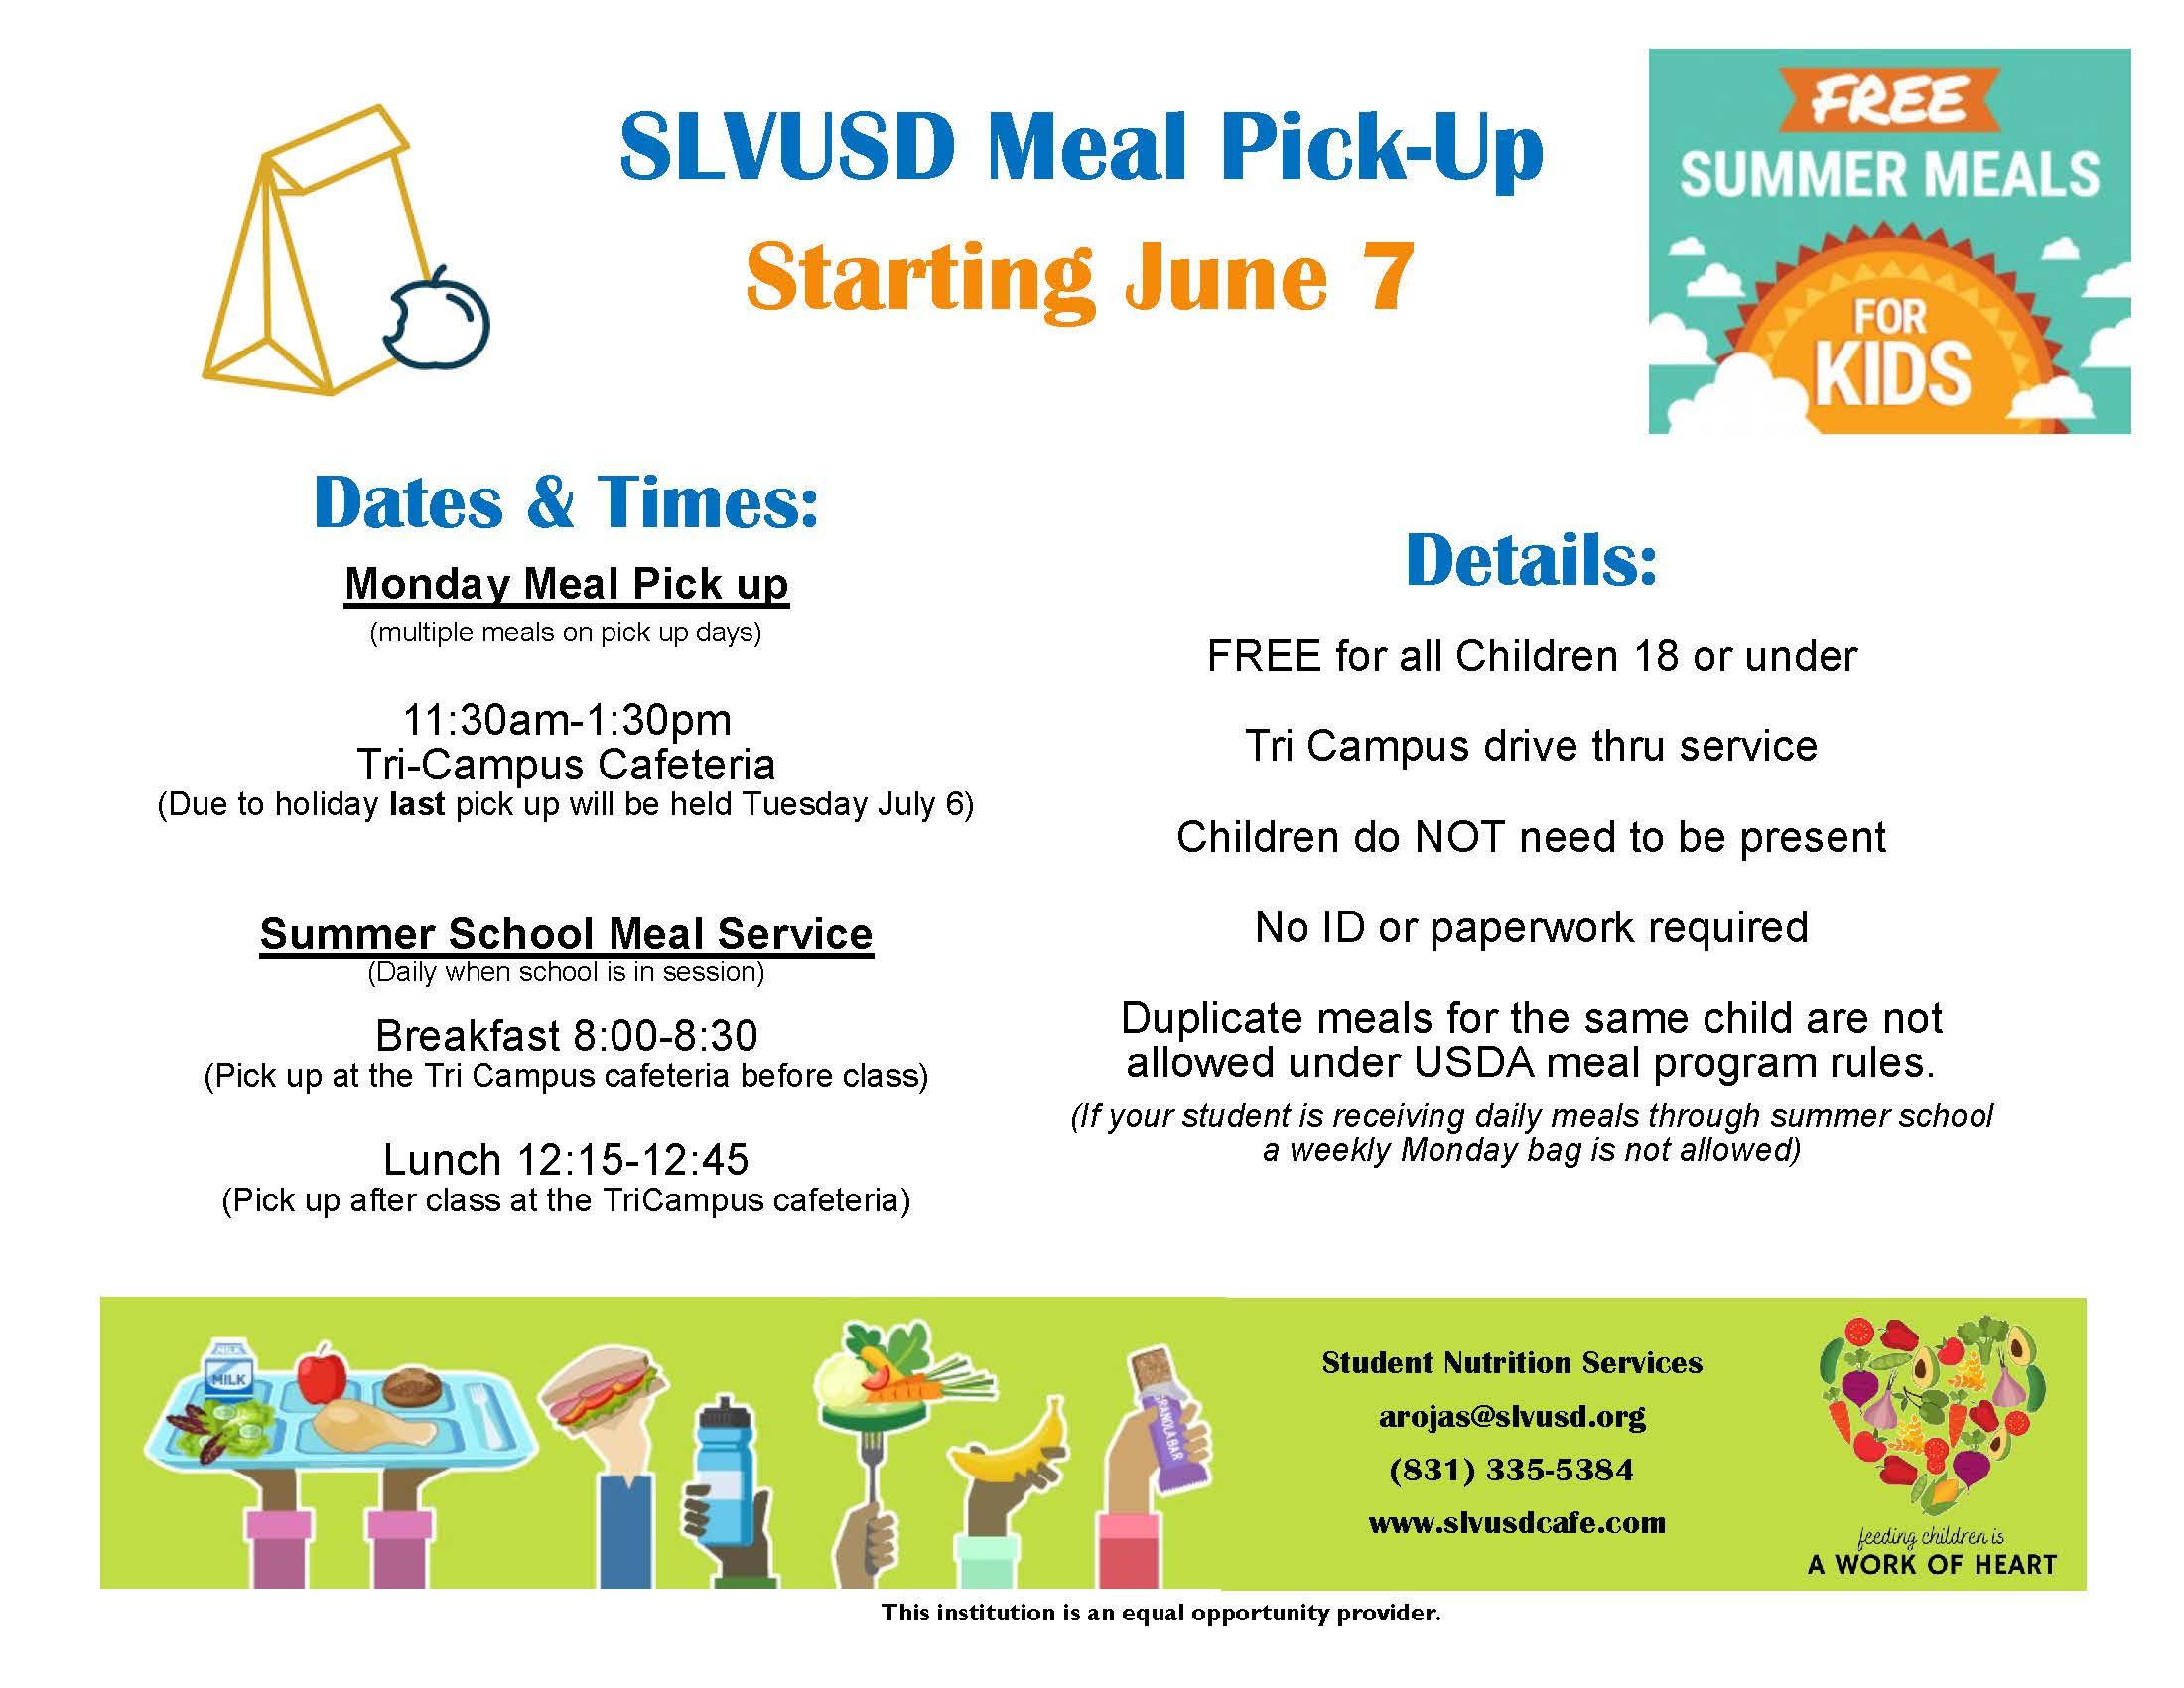 summer meals flyer; for details call 831-335-5384